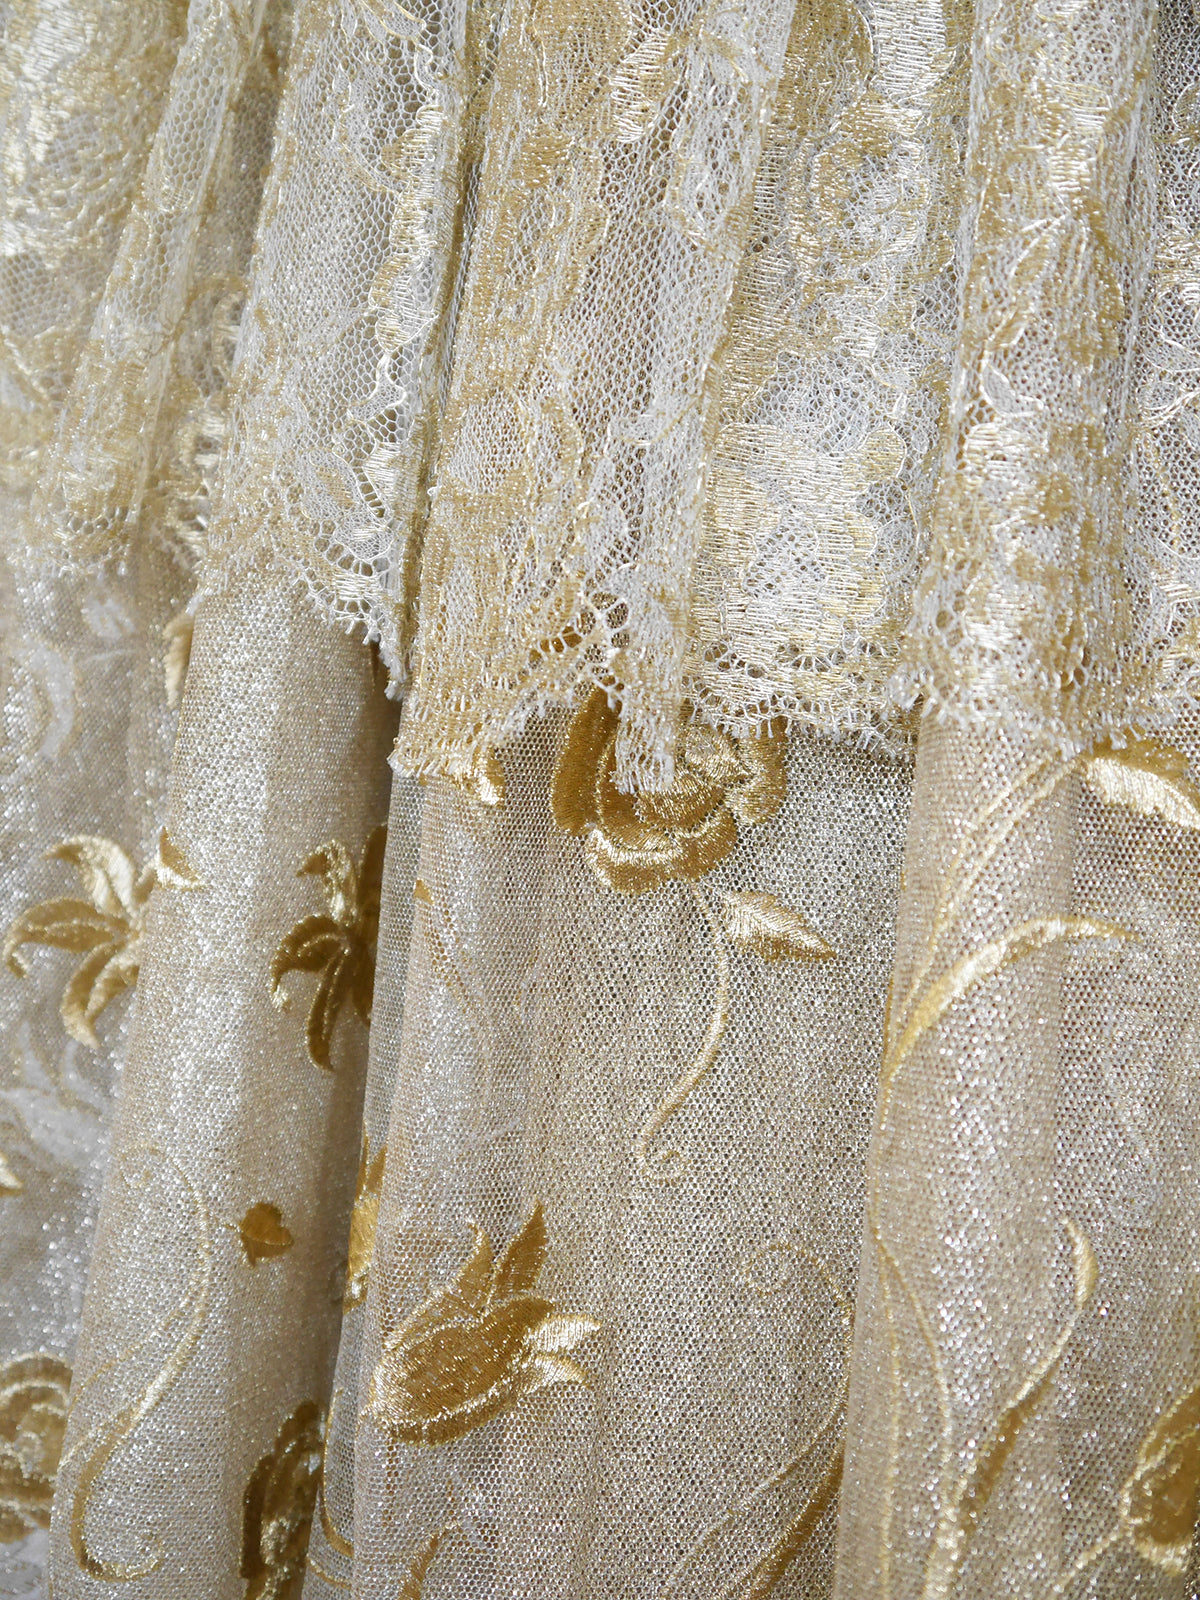 EMANUEL UNGARO c. Spring 1995 Vintage Gold Lace Evening Gown